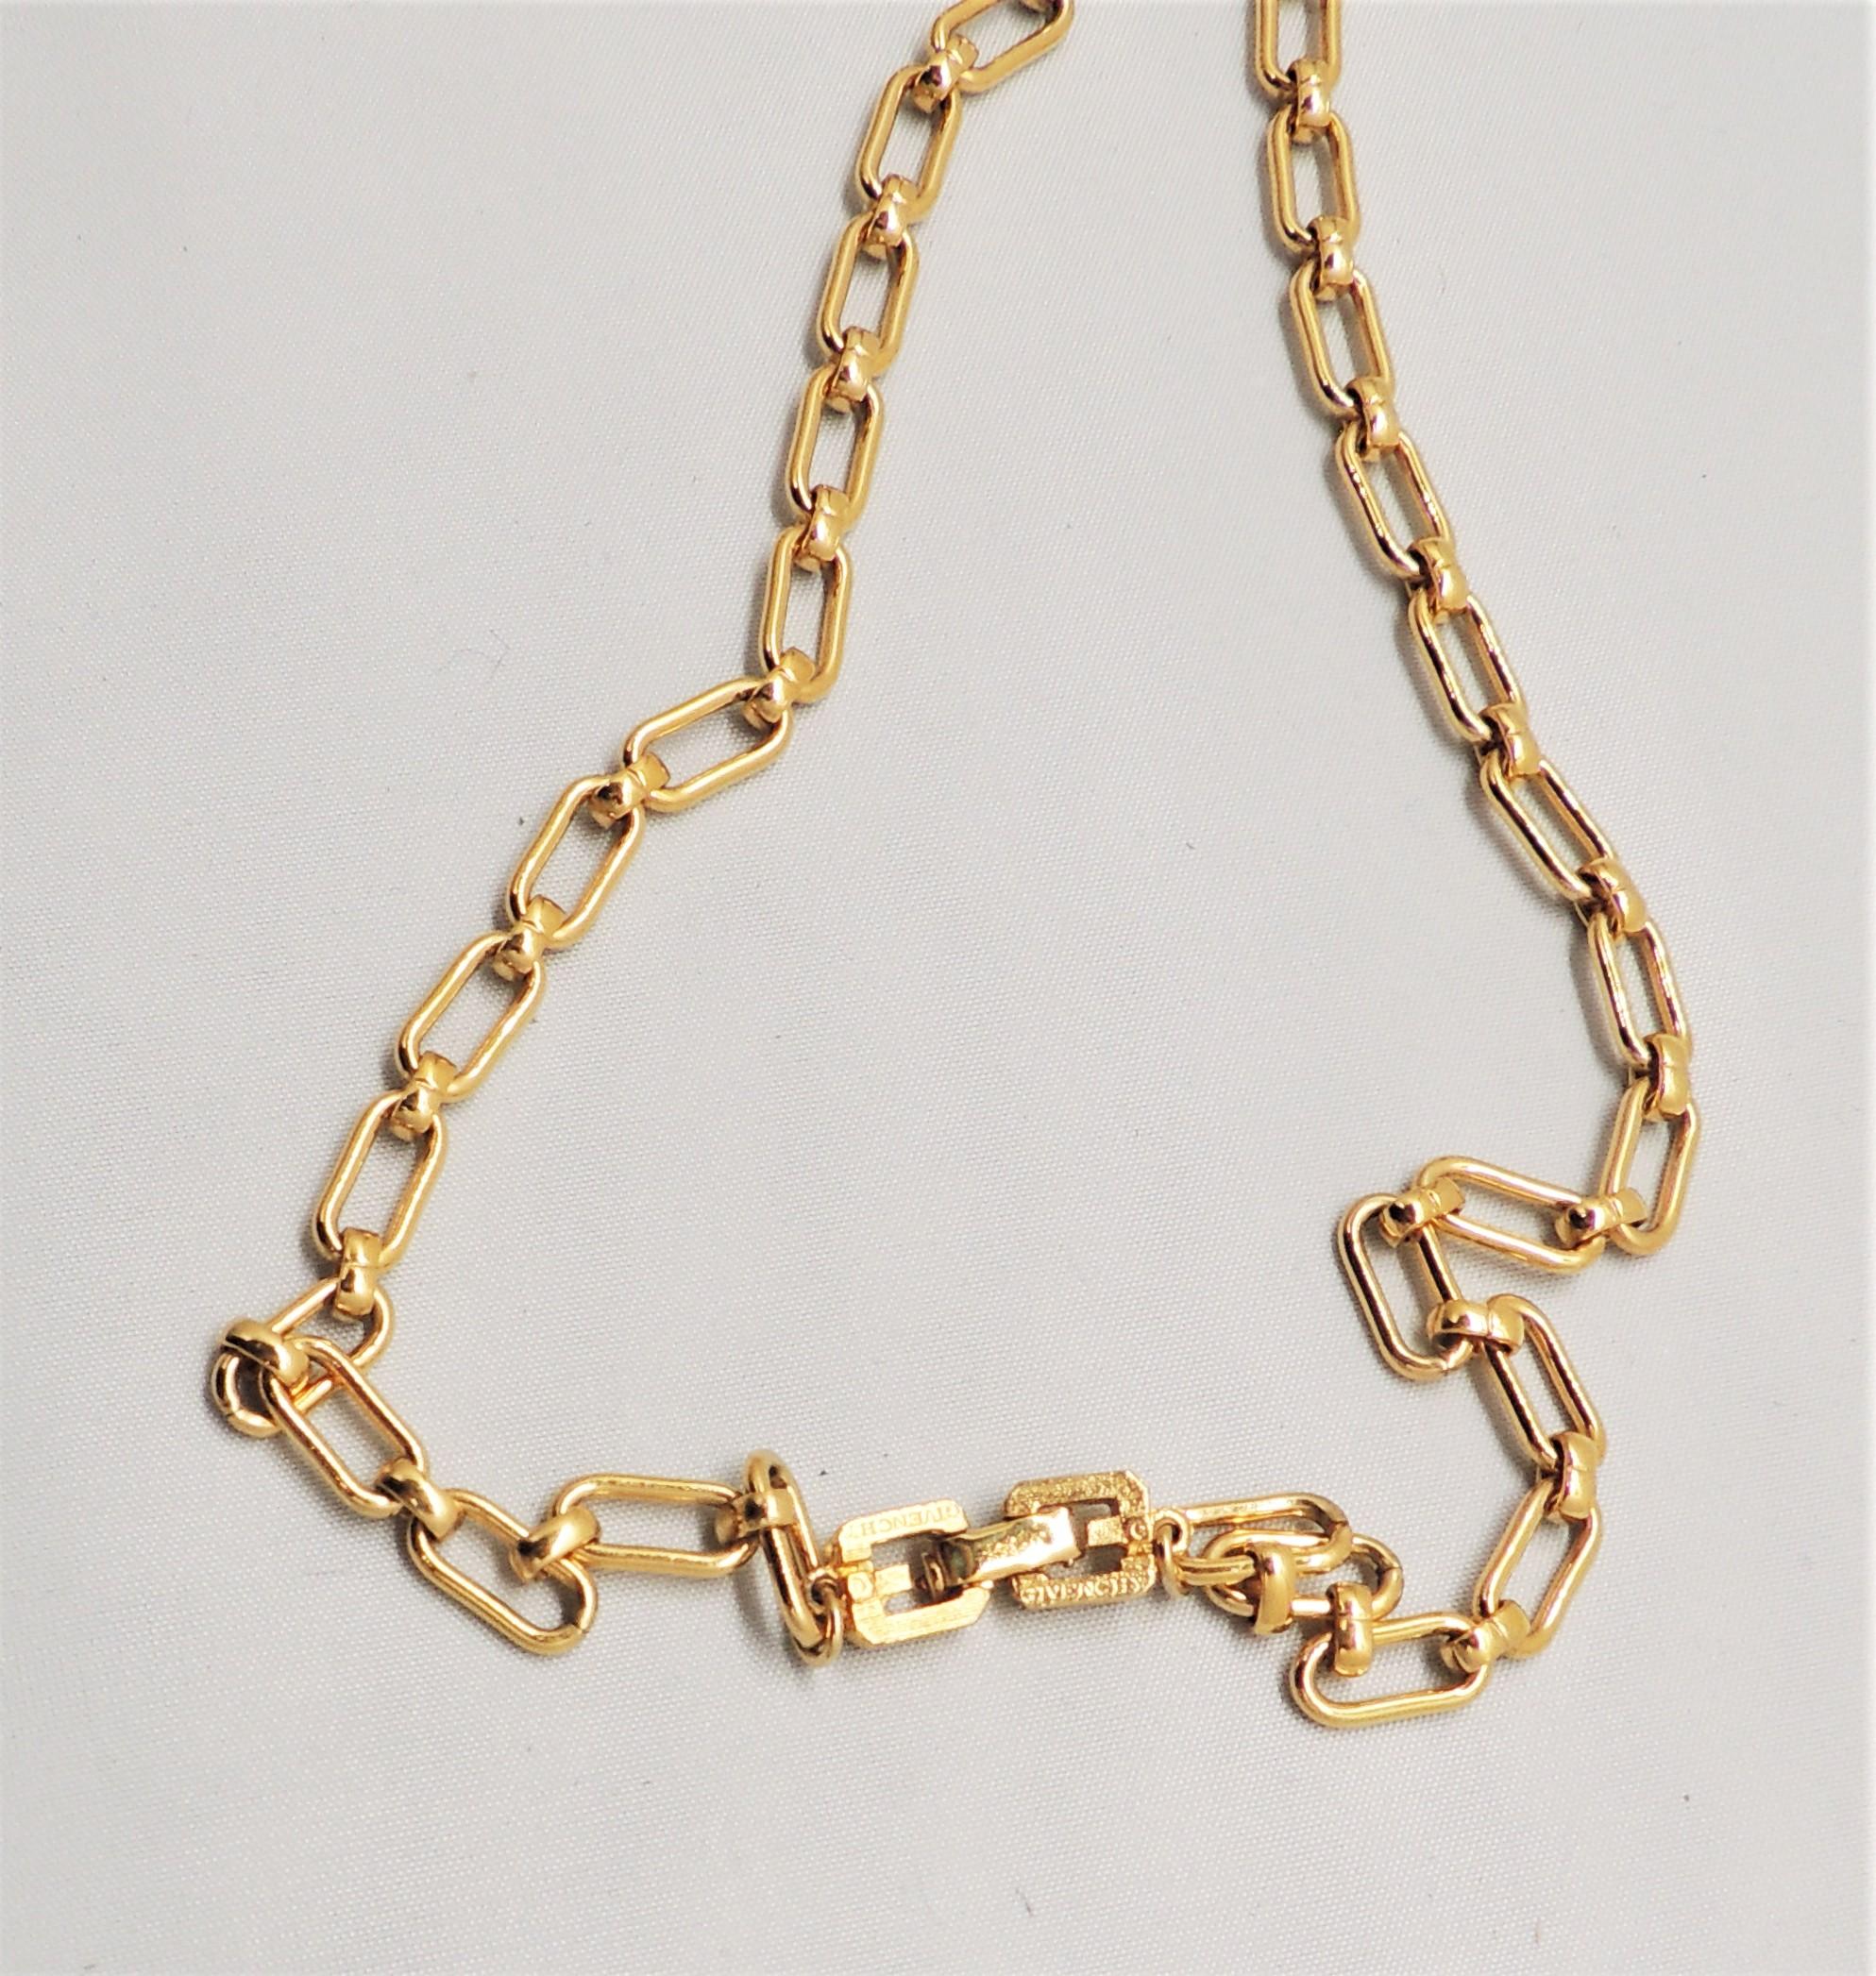 Vintage Signed Givenchy Modernist Lucite Sautoir Necklace For Sale 5